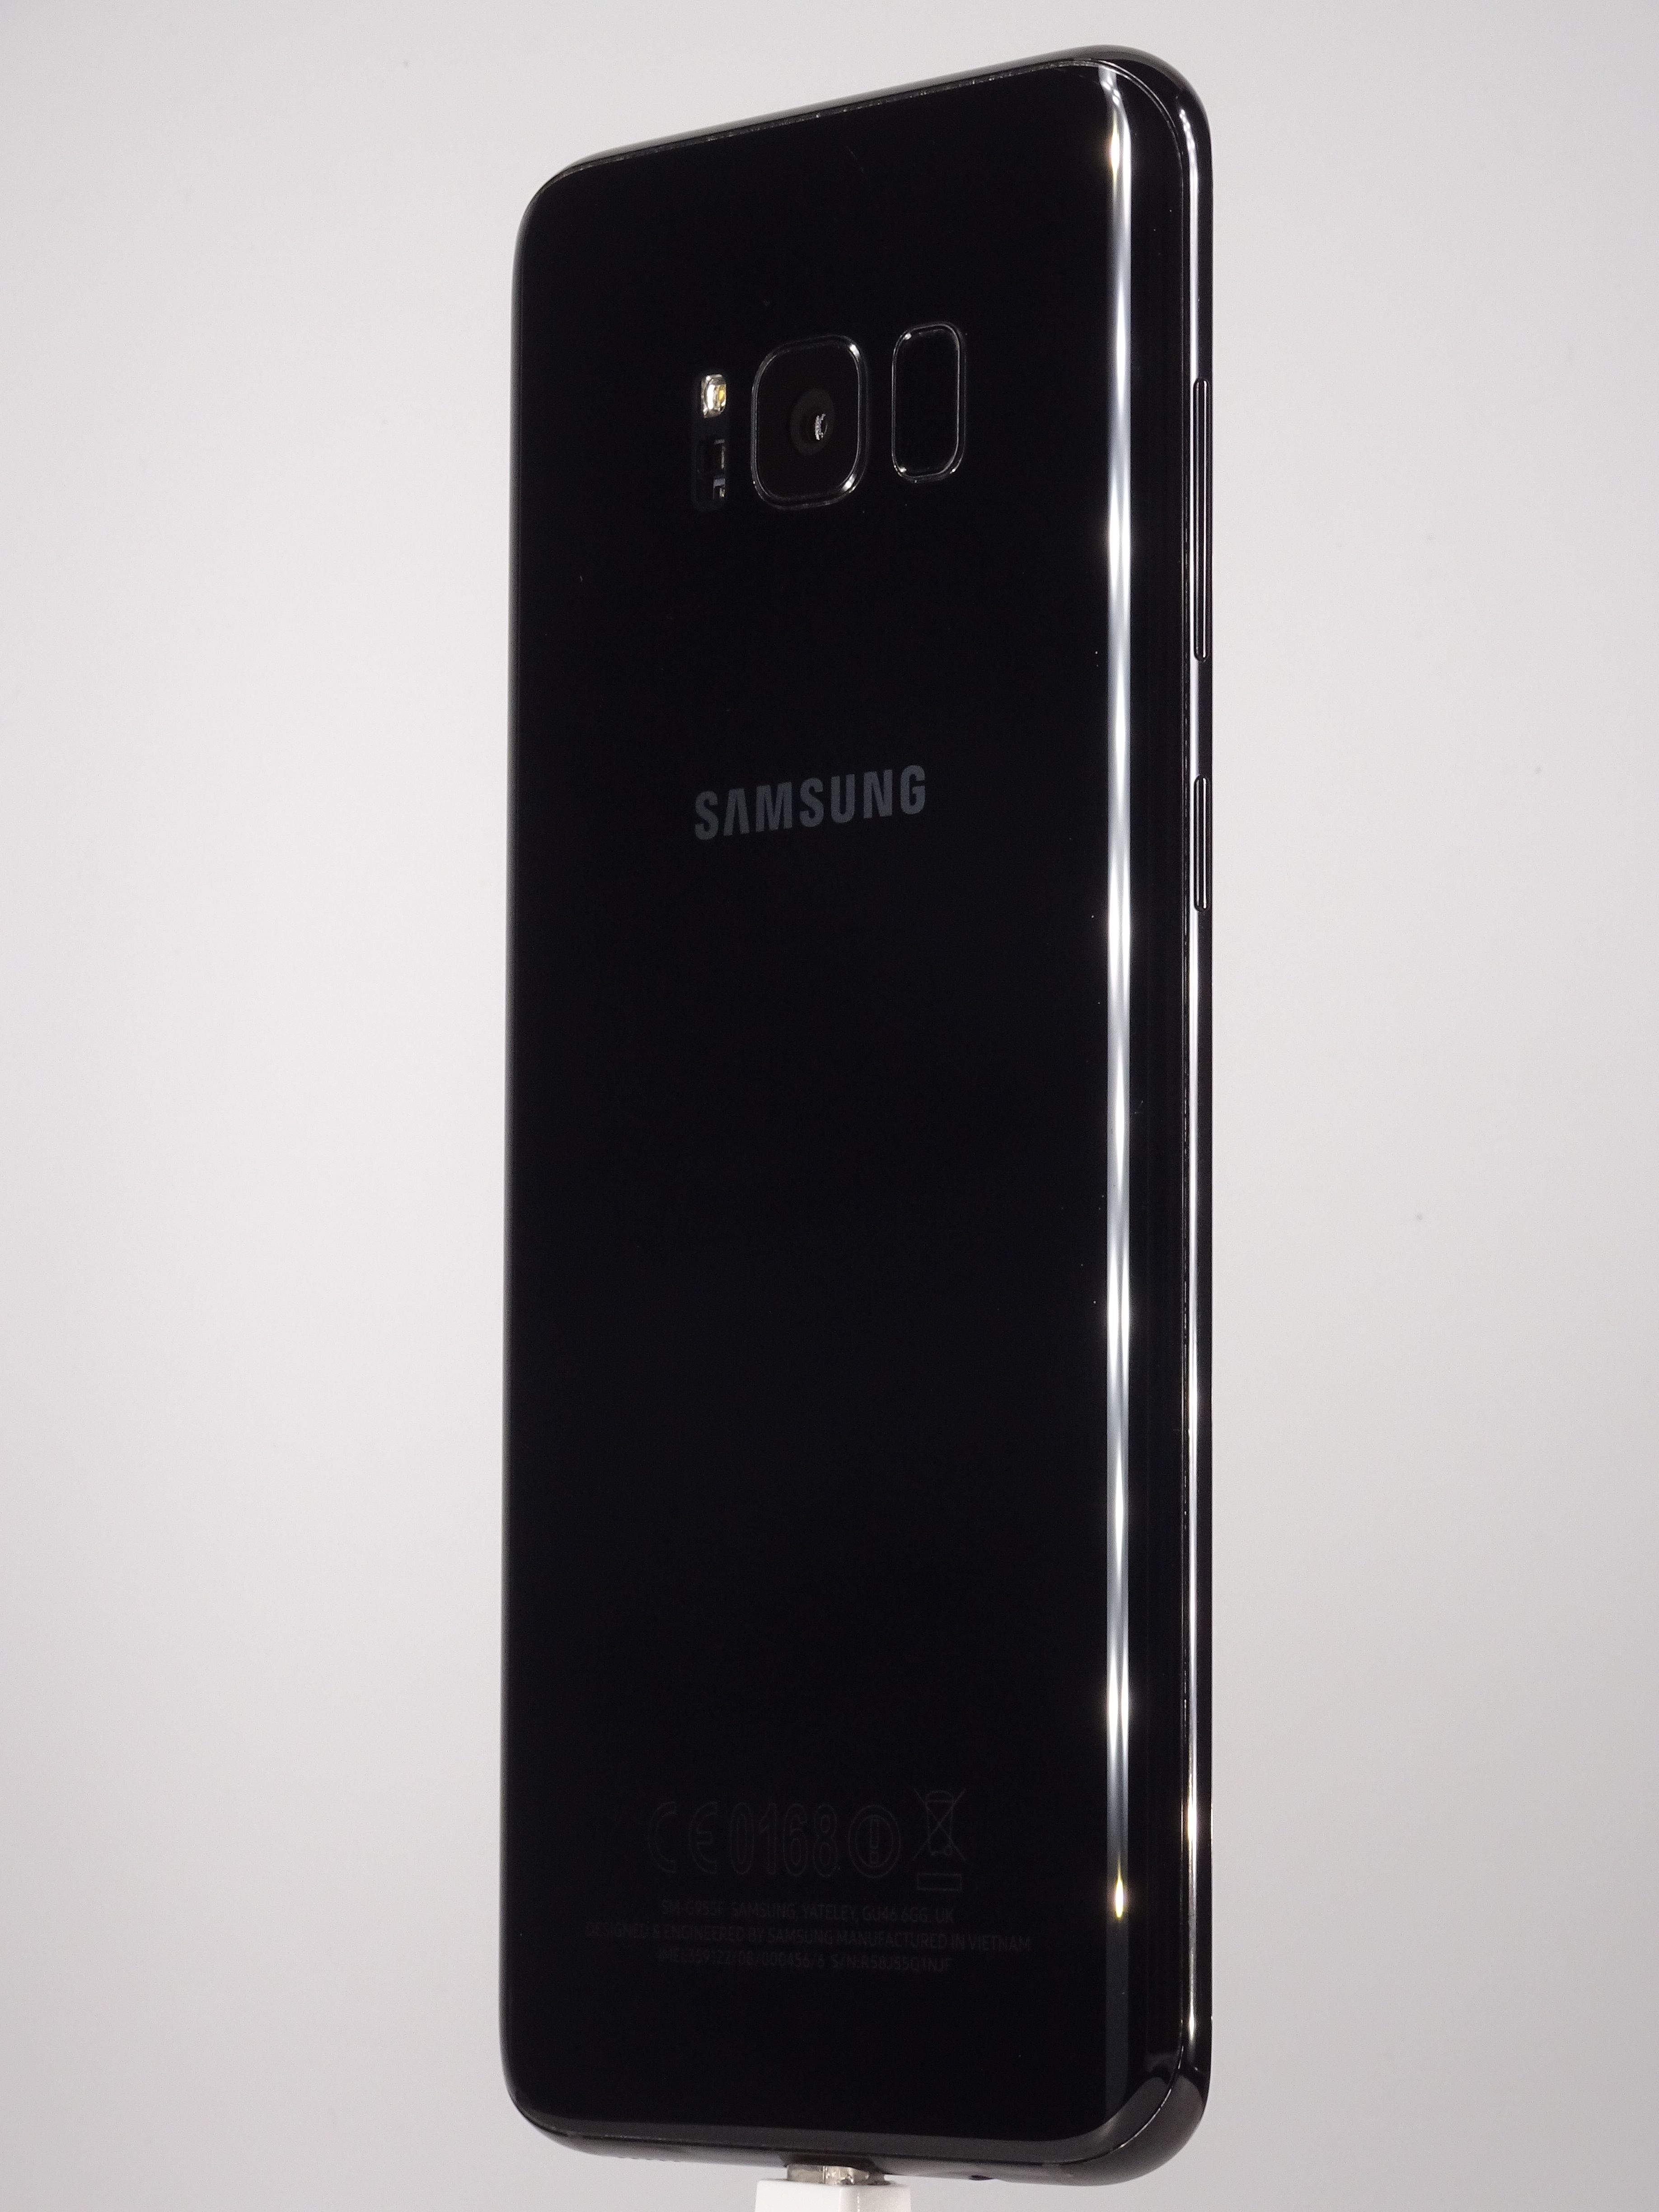 lead tomorrow bra Telefoane Samsung, Galaxy S8 Plus, 64 GB, Midnight Black - de la 799.99 lei  | Flip.ro